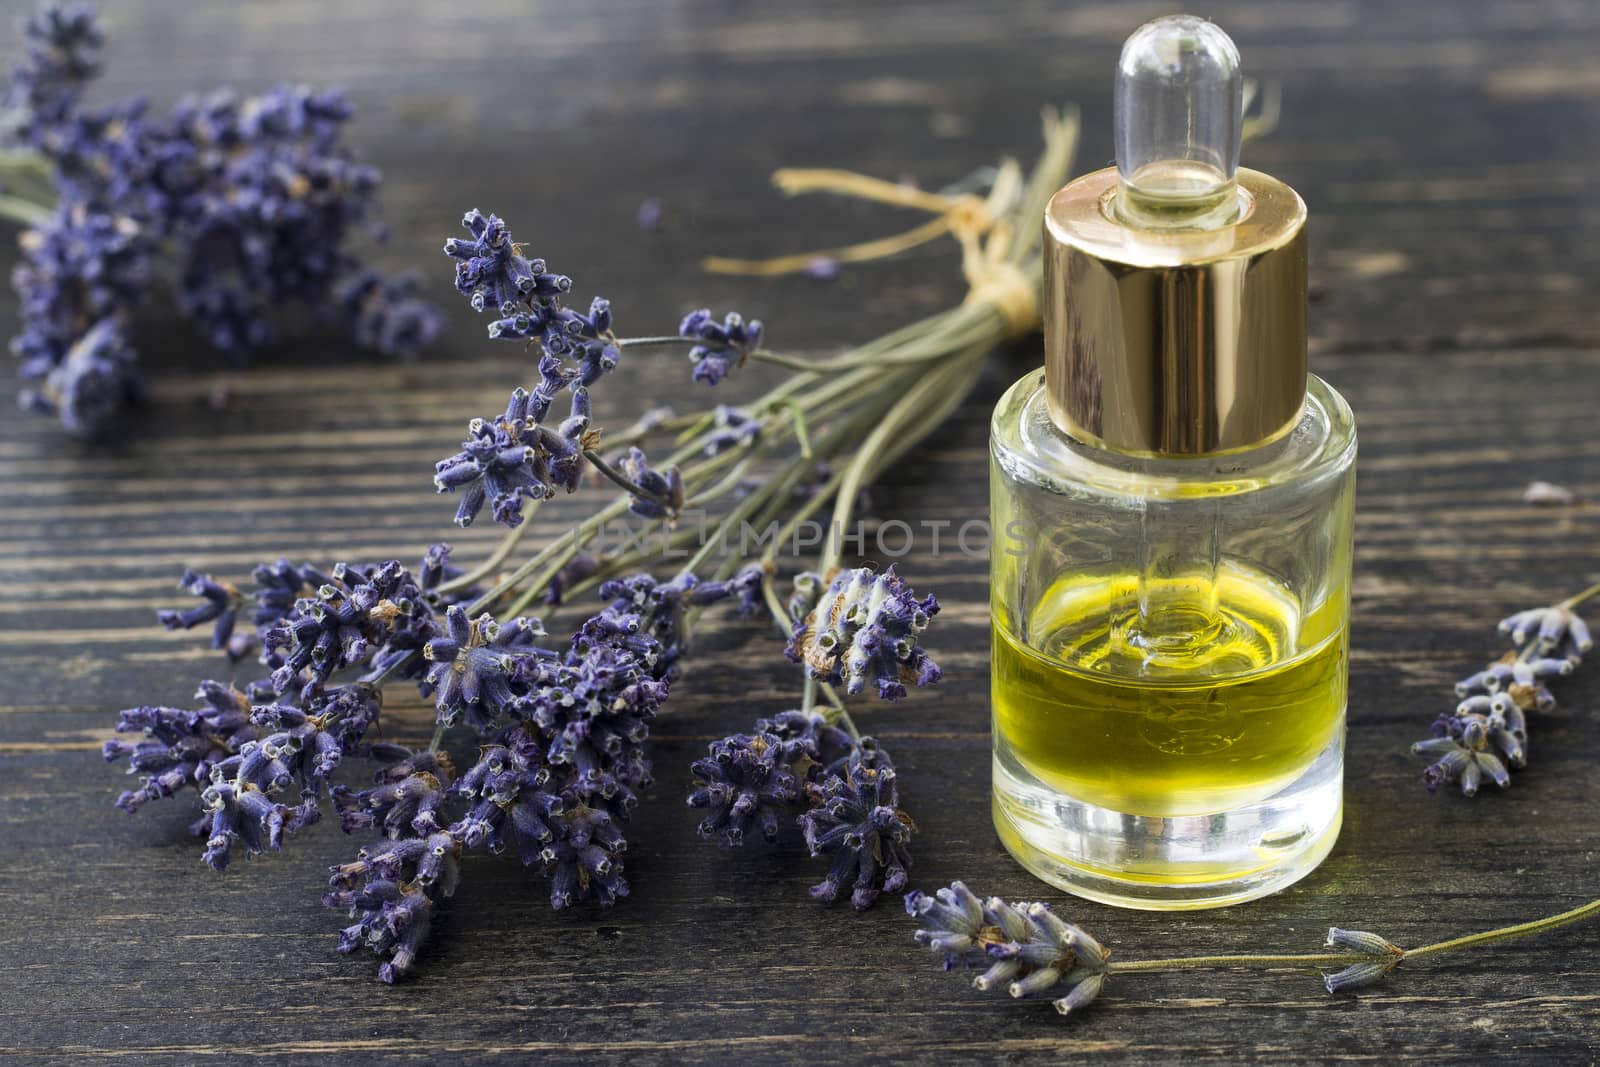 Lavender essential oil by Kidza